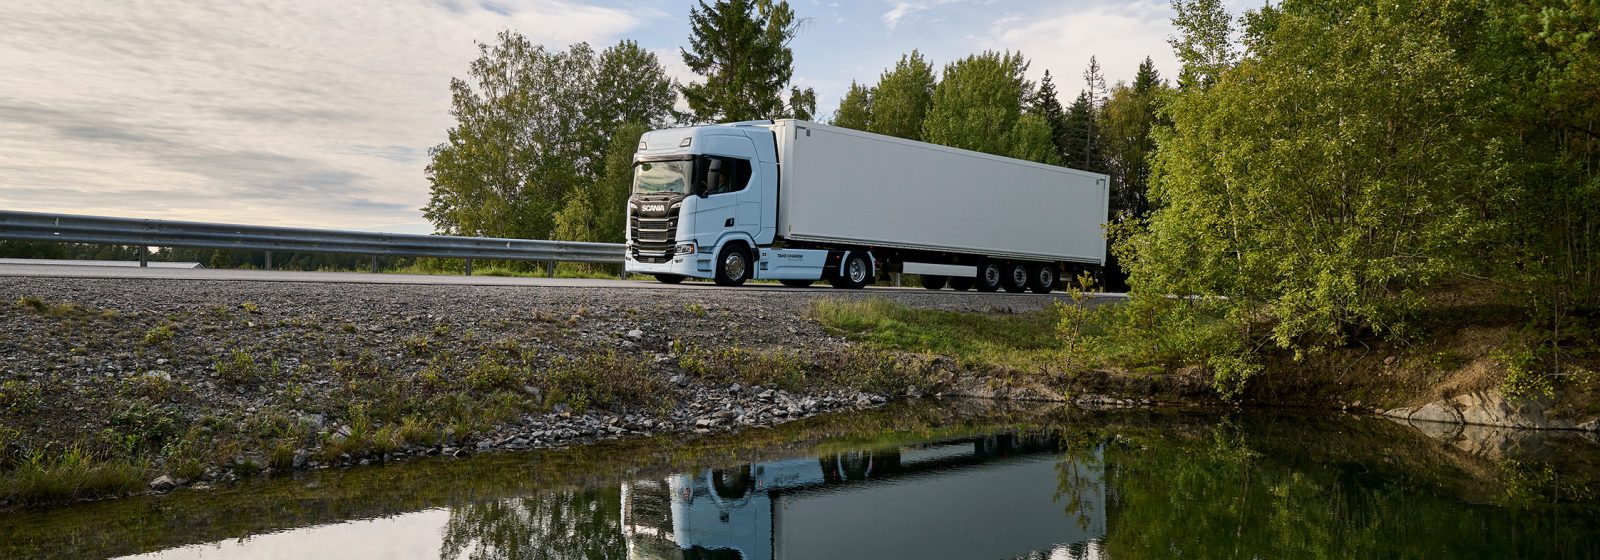 Scania e-truck